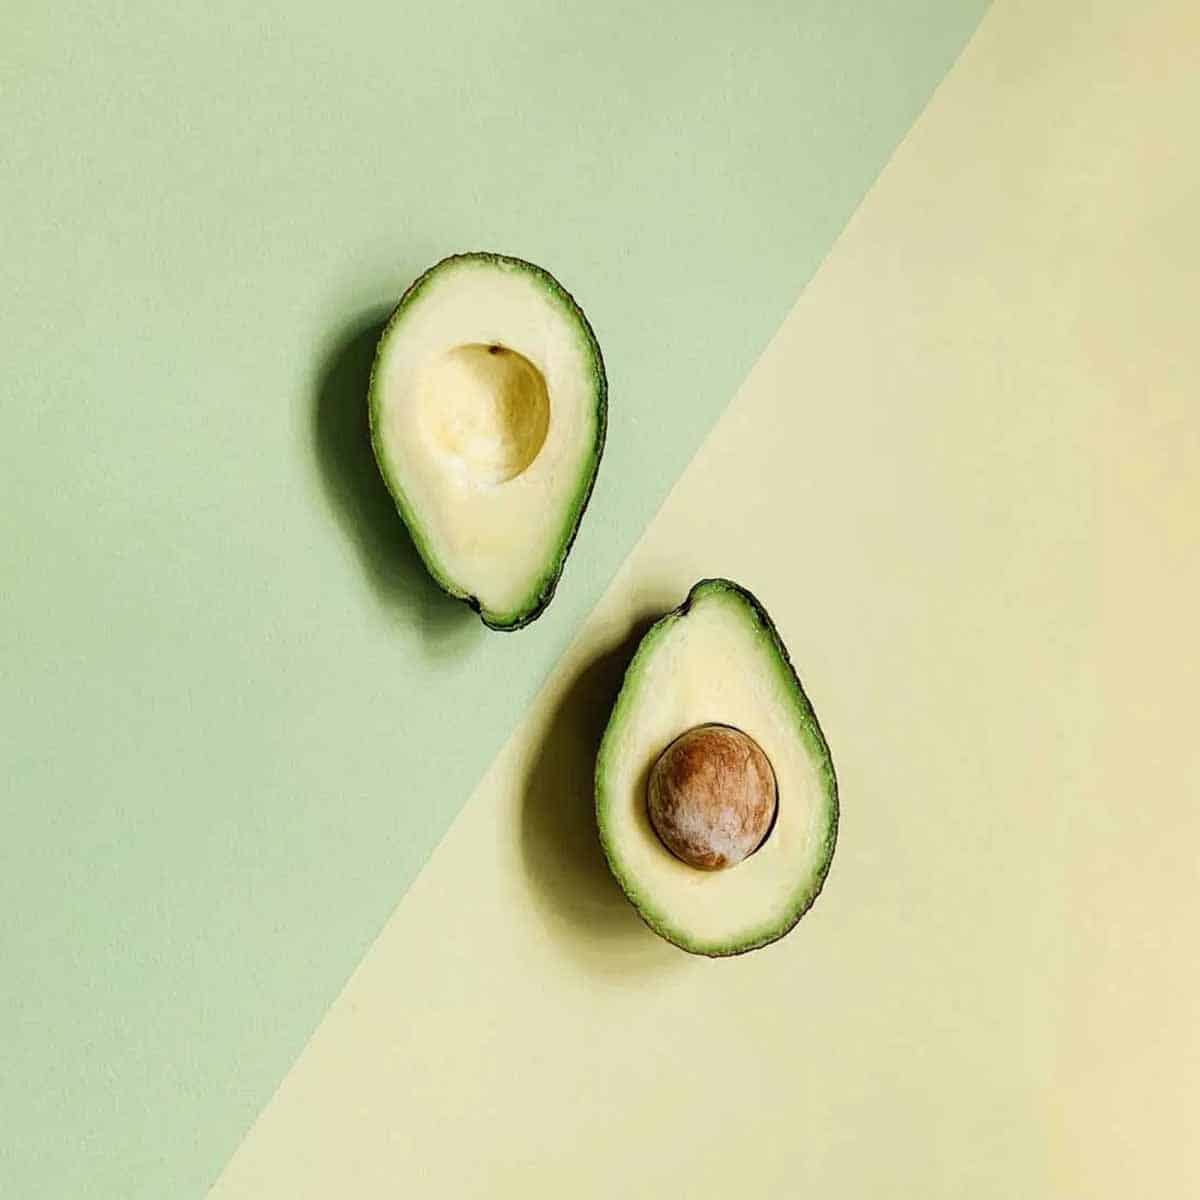 how to cut an avocado easily